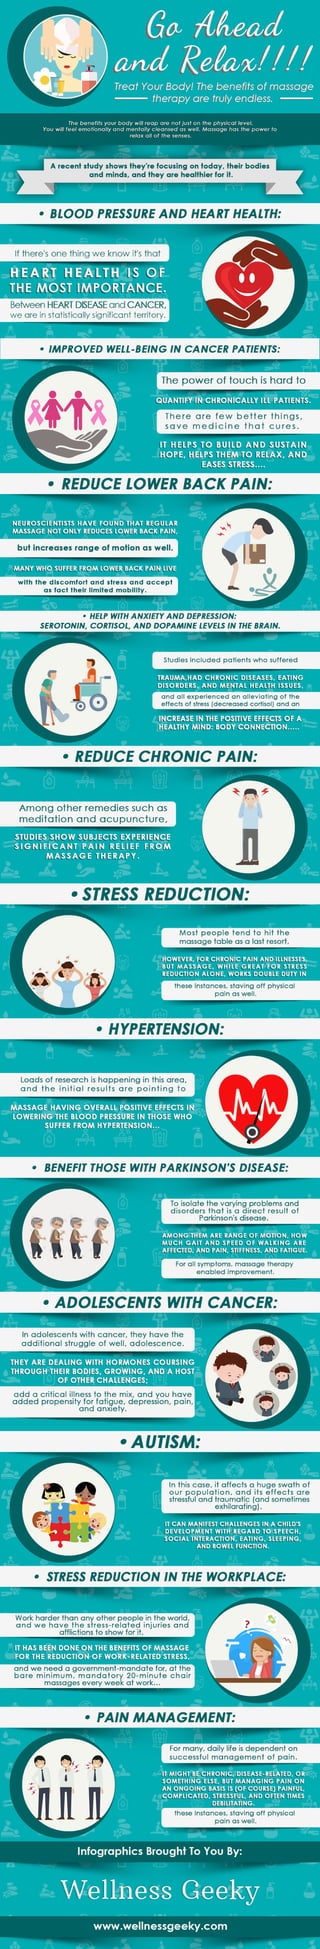 Health benefits of a massage